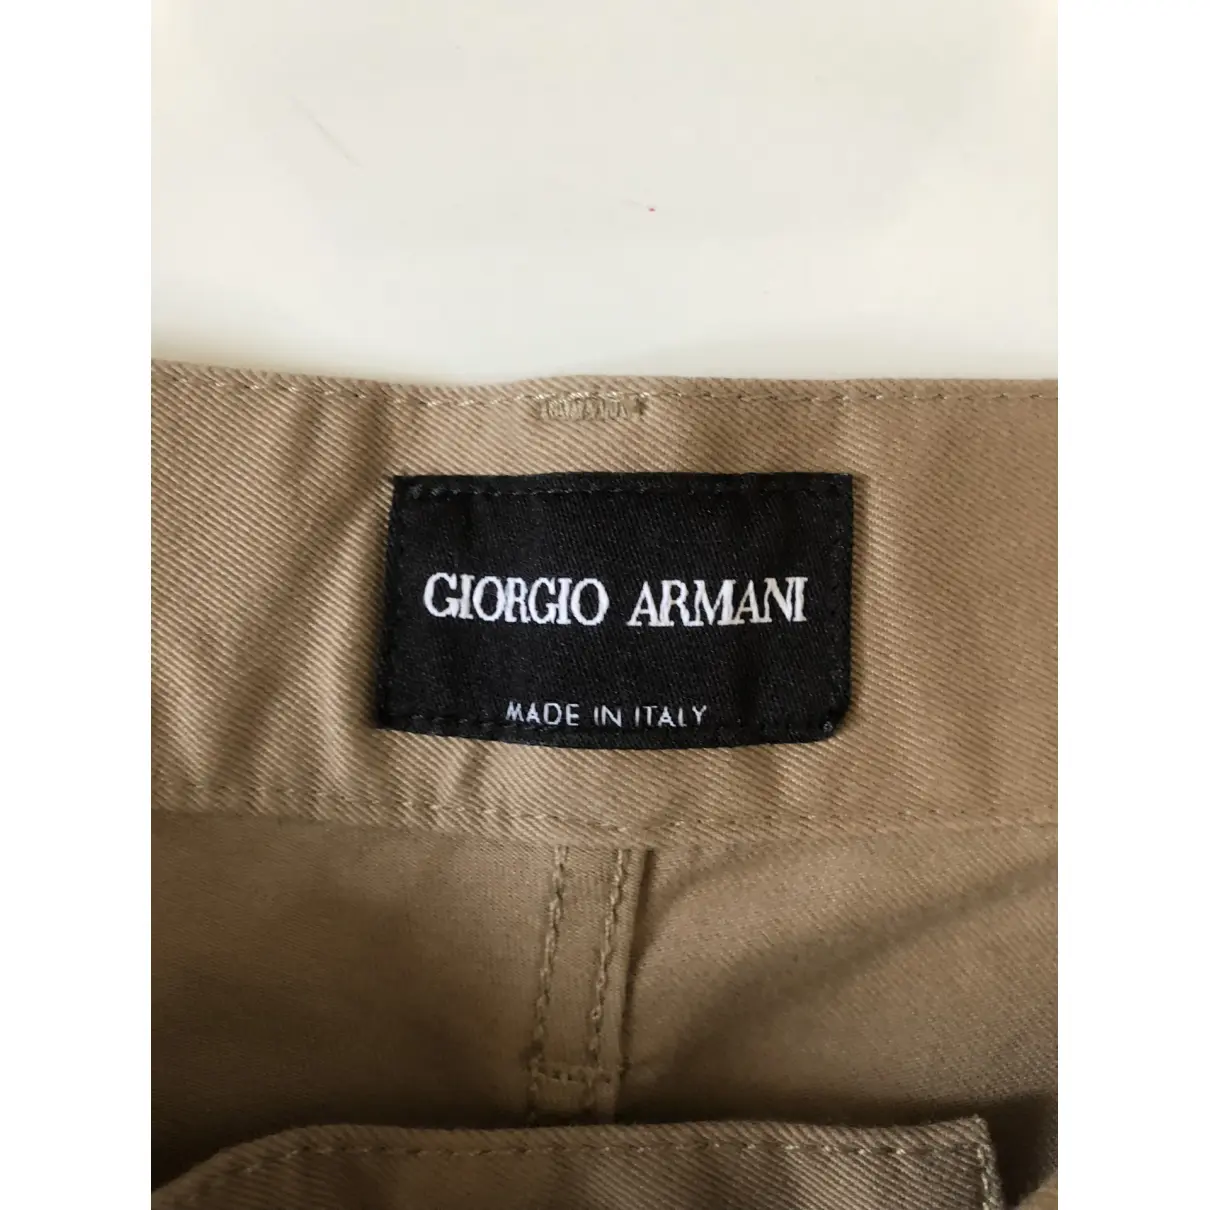 Luxury Giorgio Armani Trousers Men